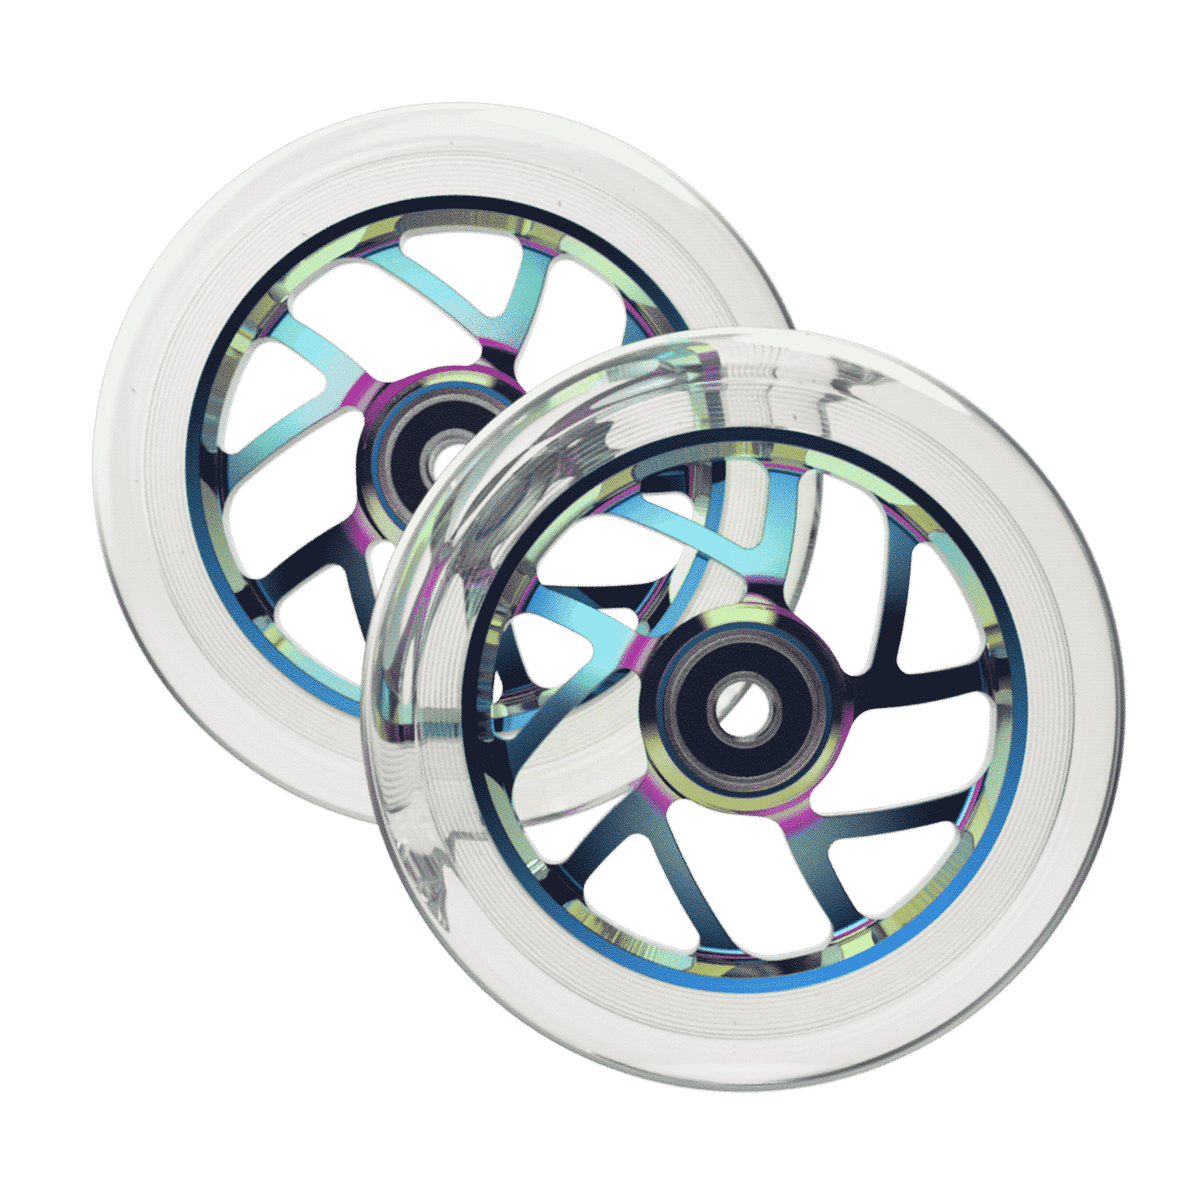 Fuzion Flight Wheel - Riding Scooters - Bland Pro Shop